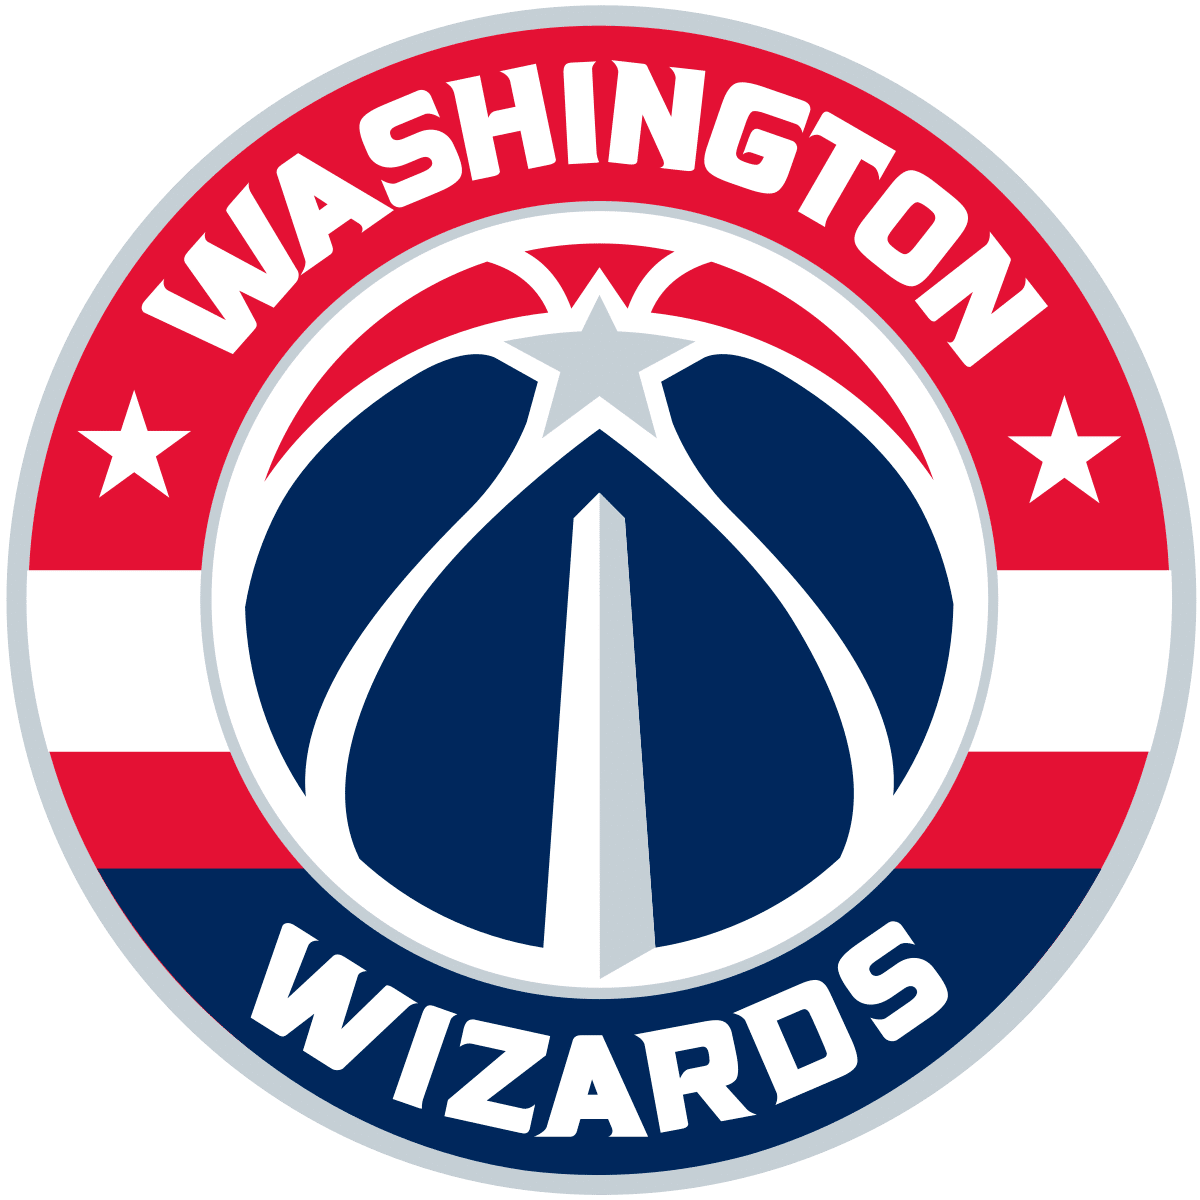 Full List of Washington Wizards 2023 NBA Draft Picks